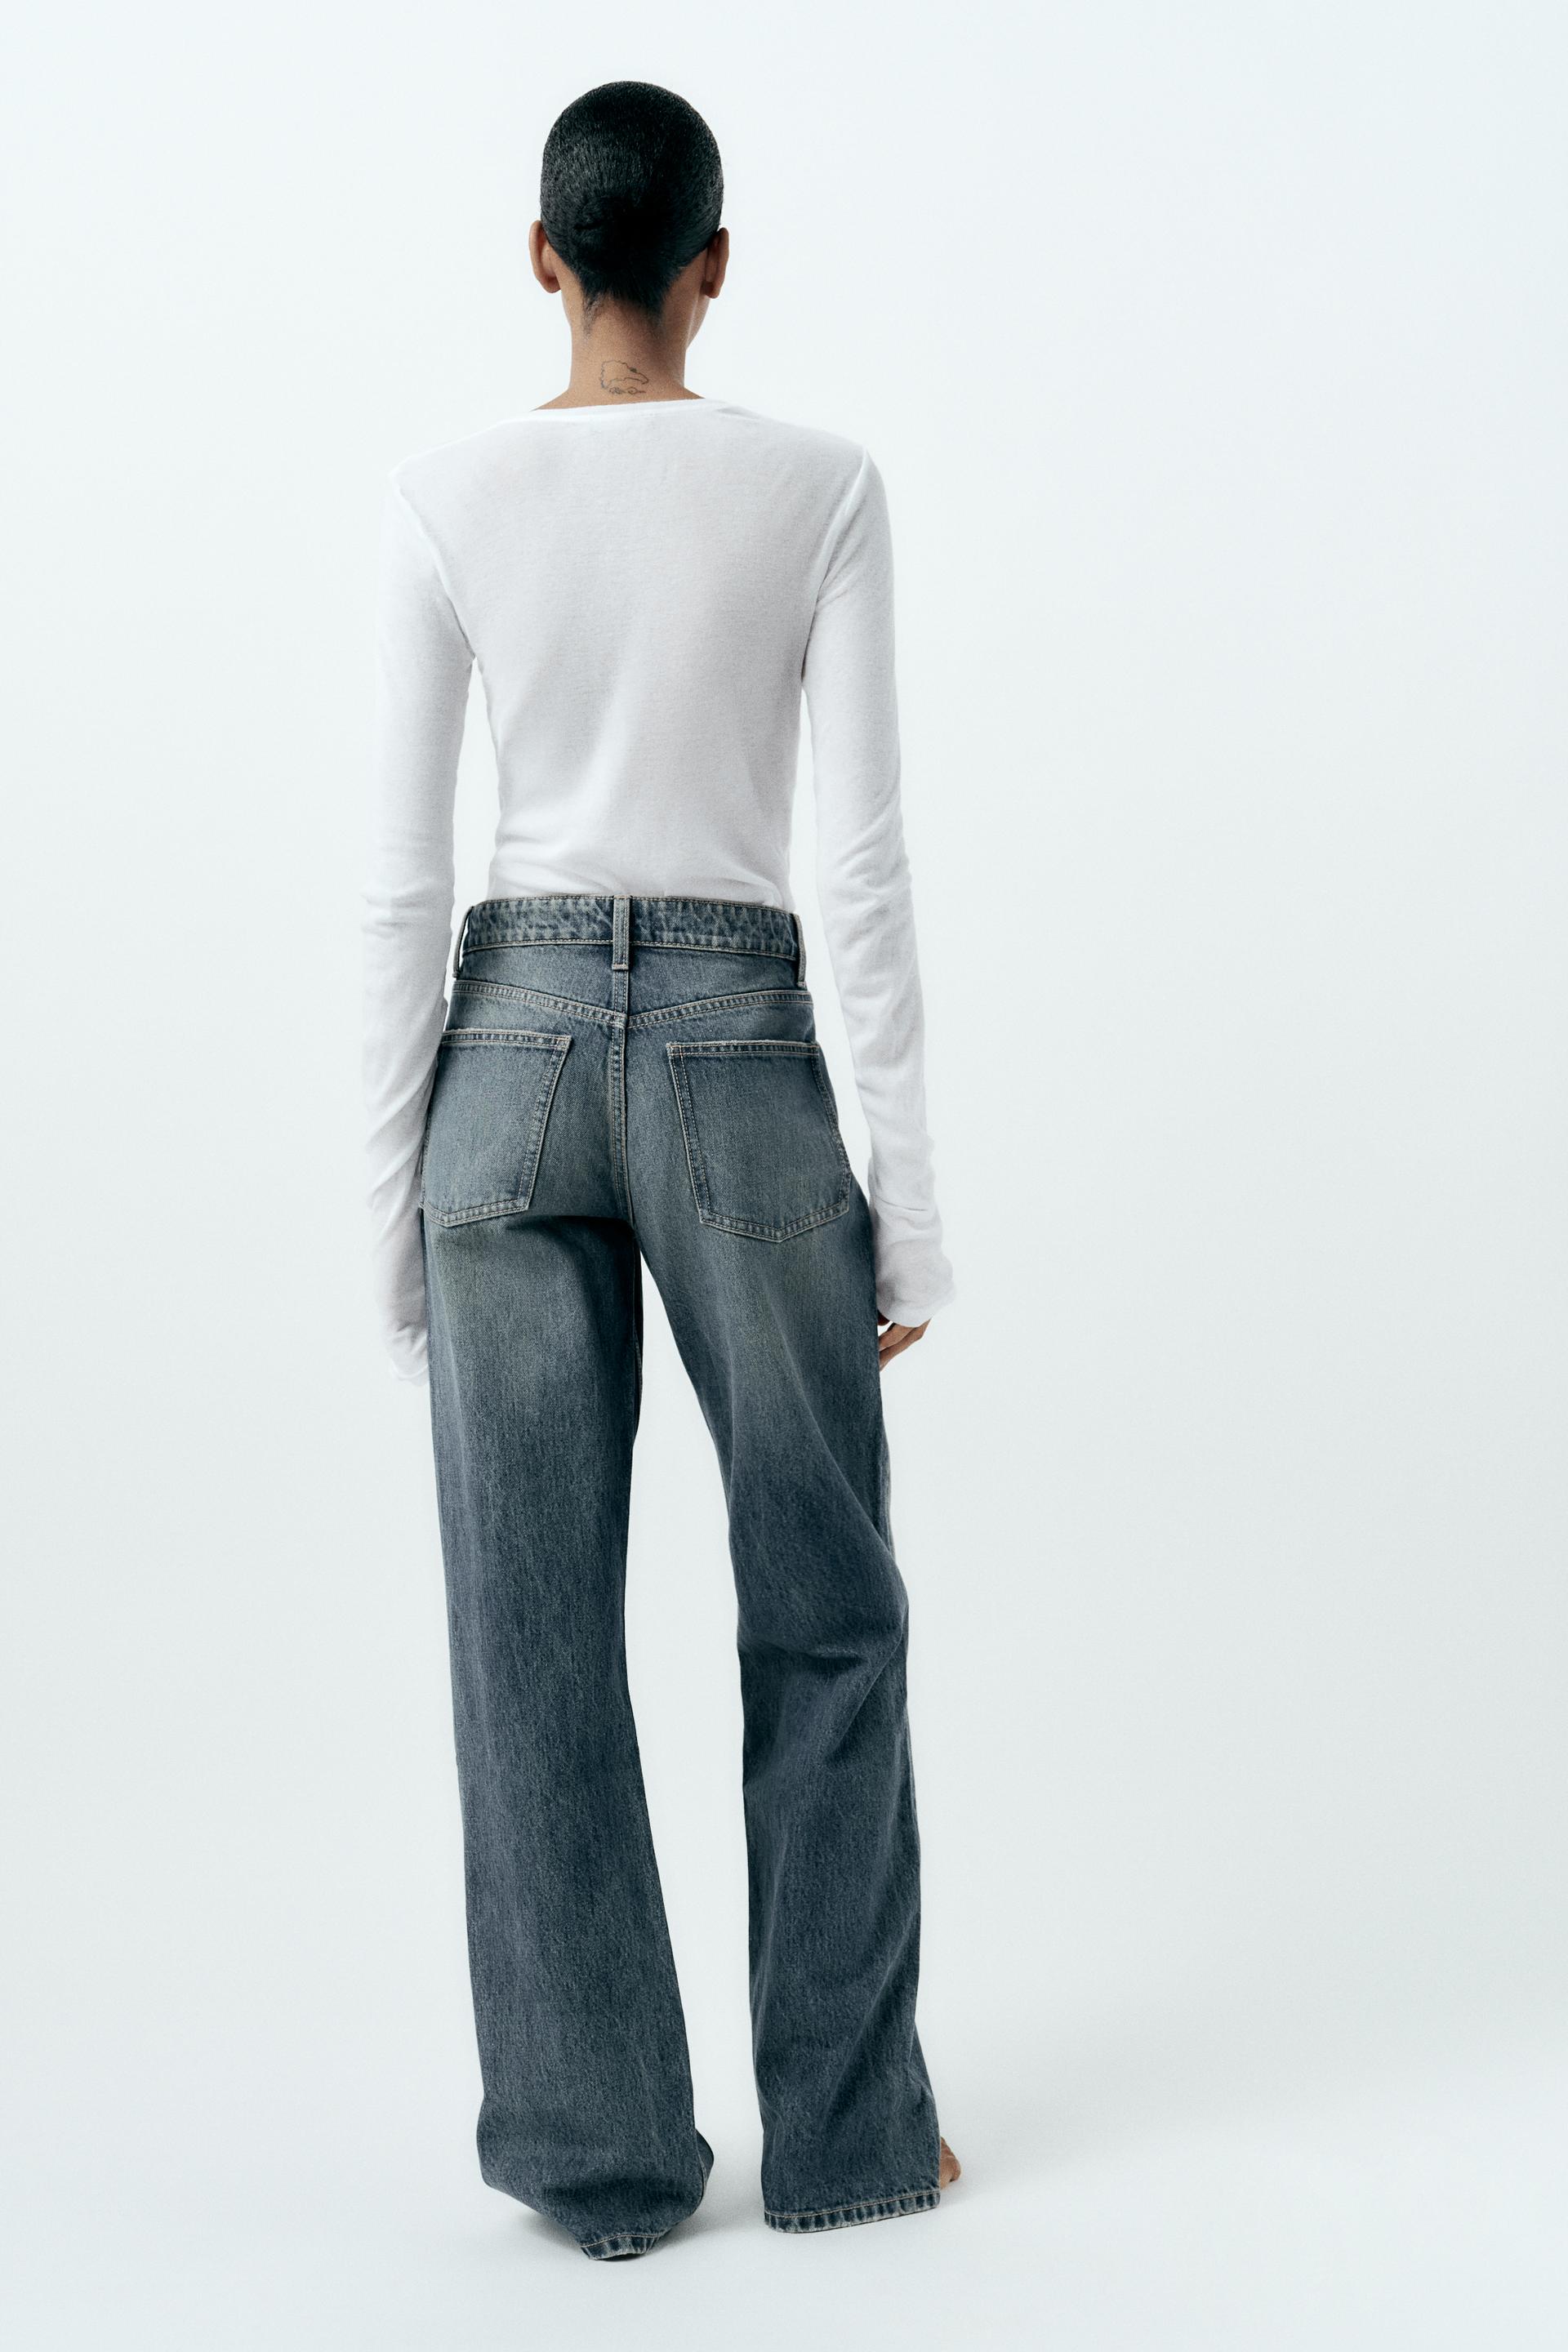 Zara Pink Jeans Loose fit Wide Leg Mid Rise Size UK10 EUR38 US6 Ref 6688  040